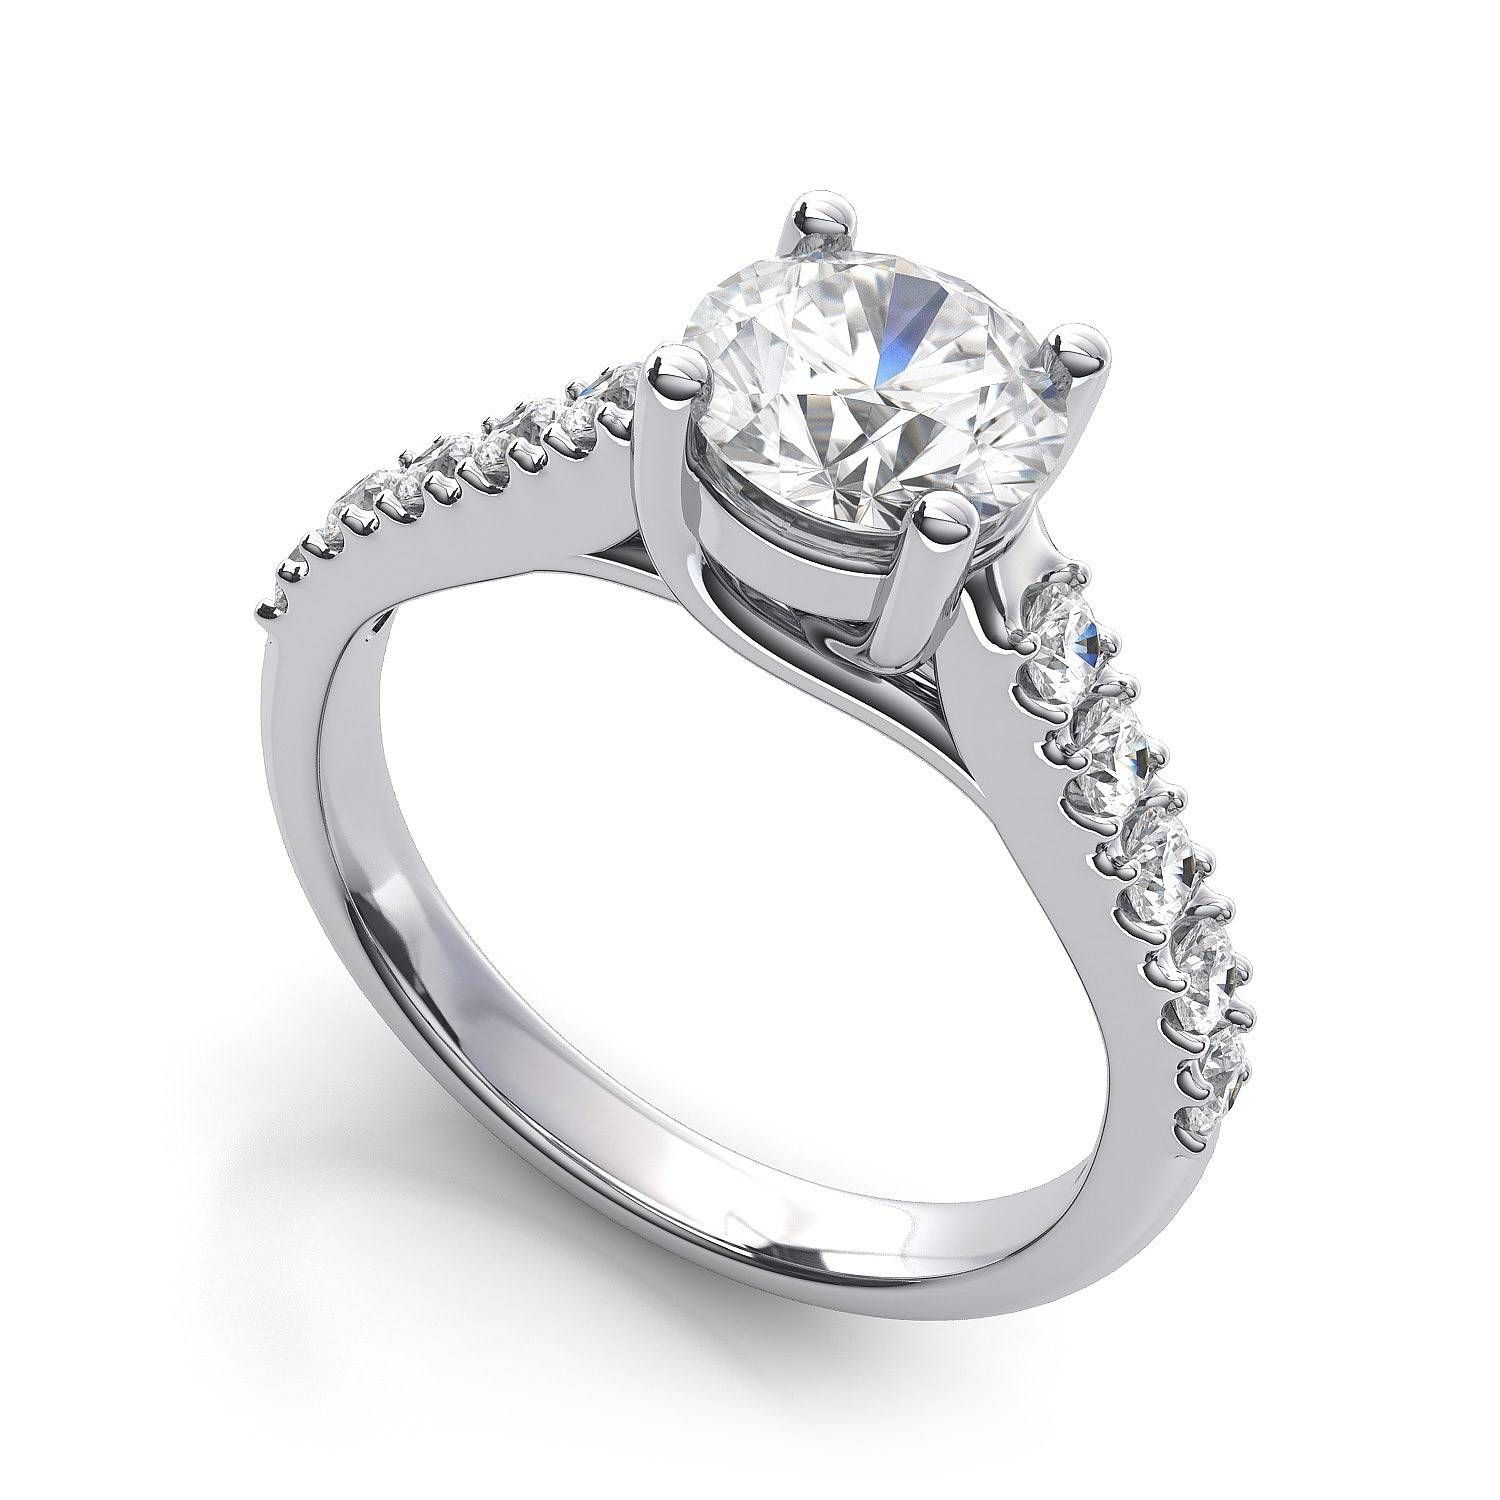 Ring Wedding Rings With Diamonds All Around Platinum Wedding Ring With Regard To Wedding Bands With Diamonds All Around (View 7 of 15)